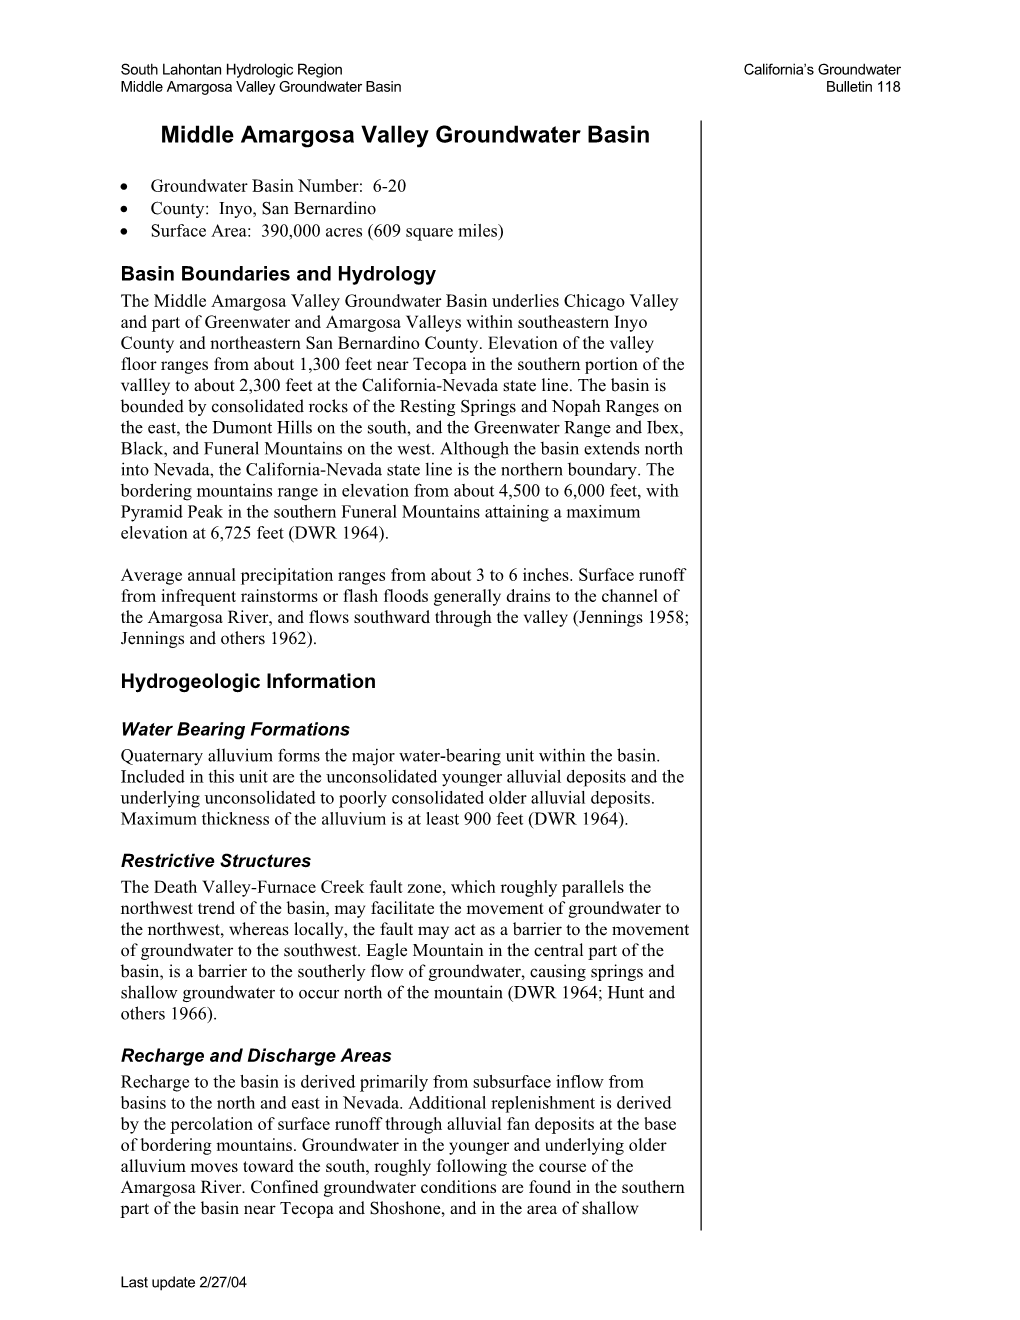 Middle Amargosa Valley Groundwater Basin Bulletin 118